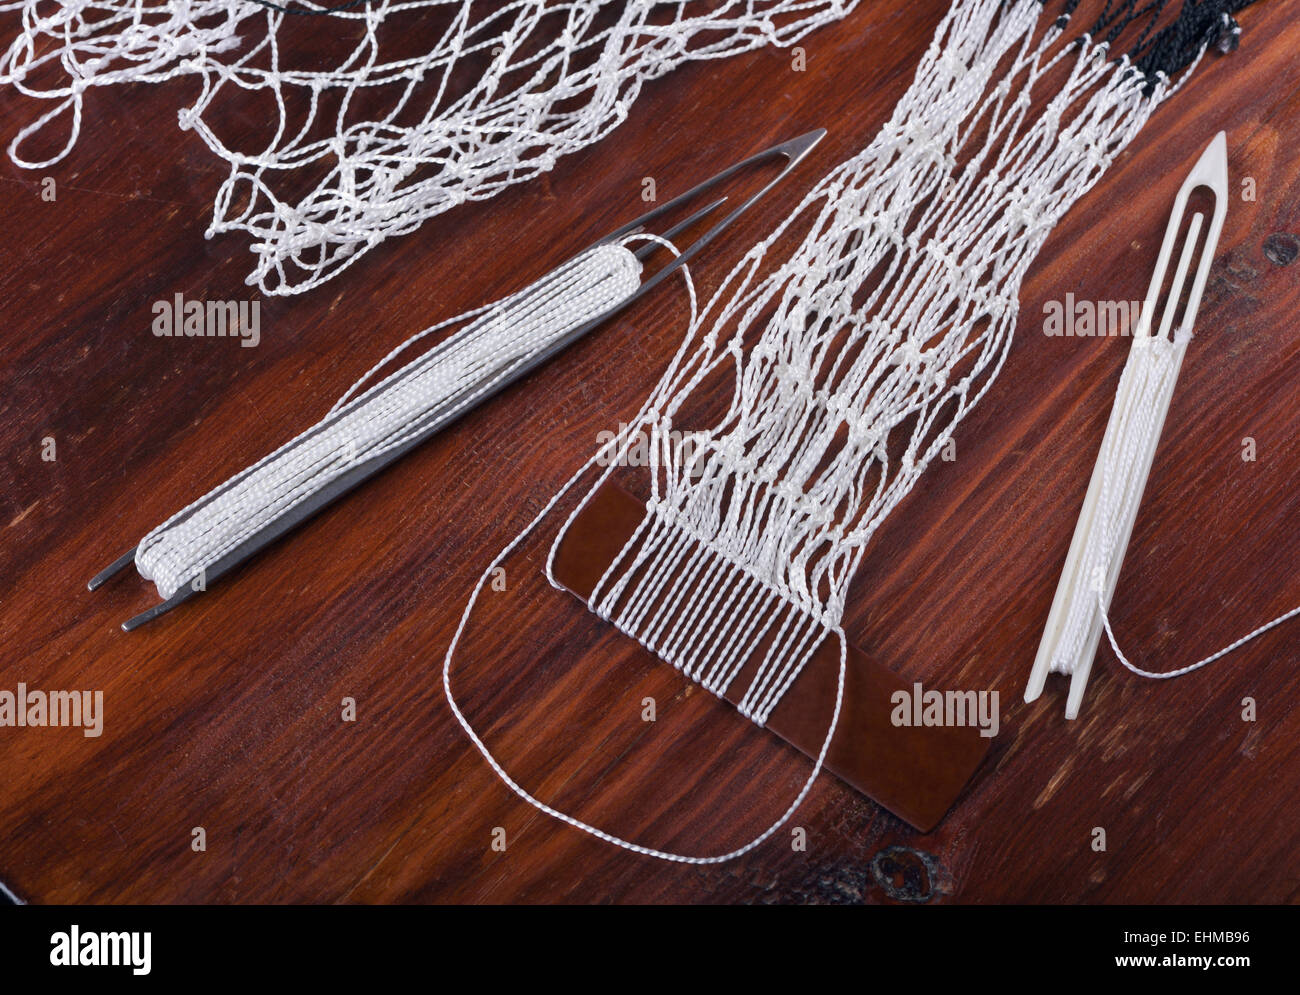 Netting, Fishing, Crafts & Weaving